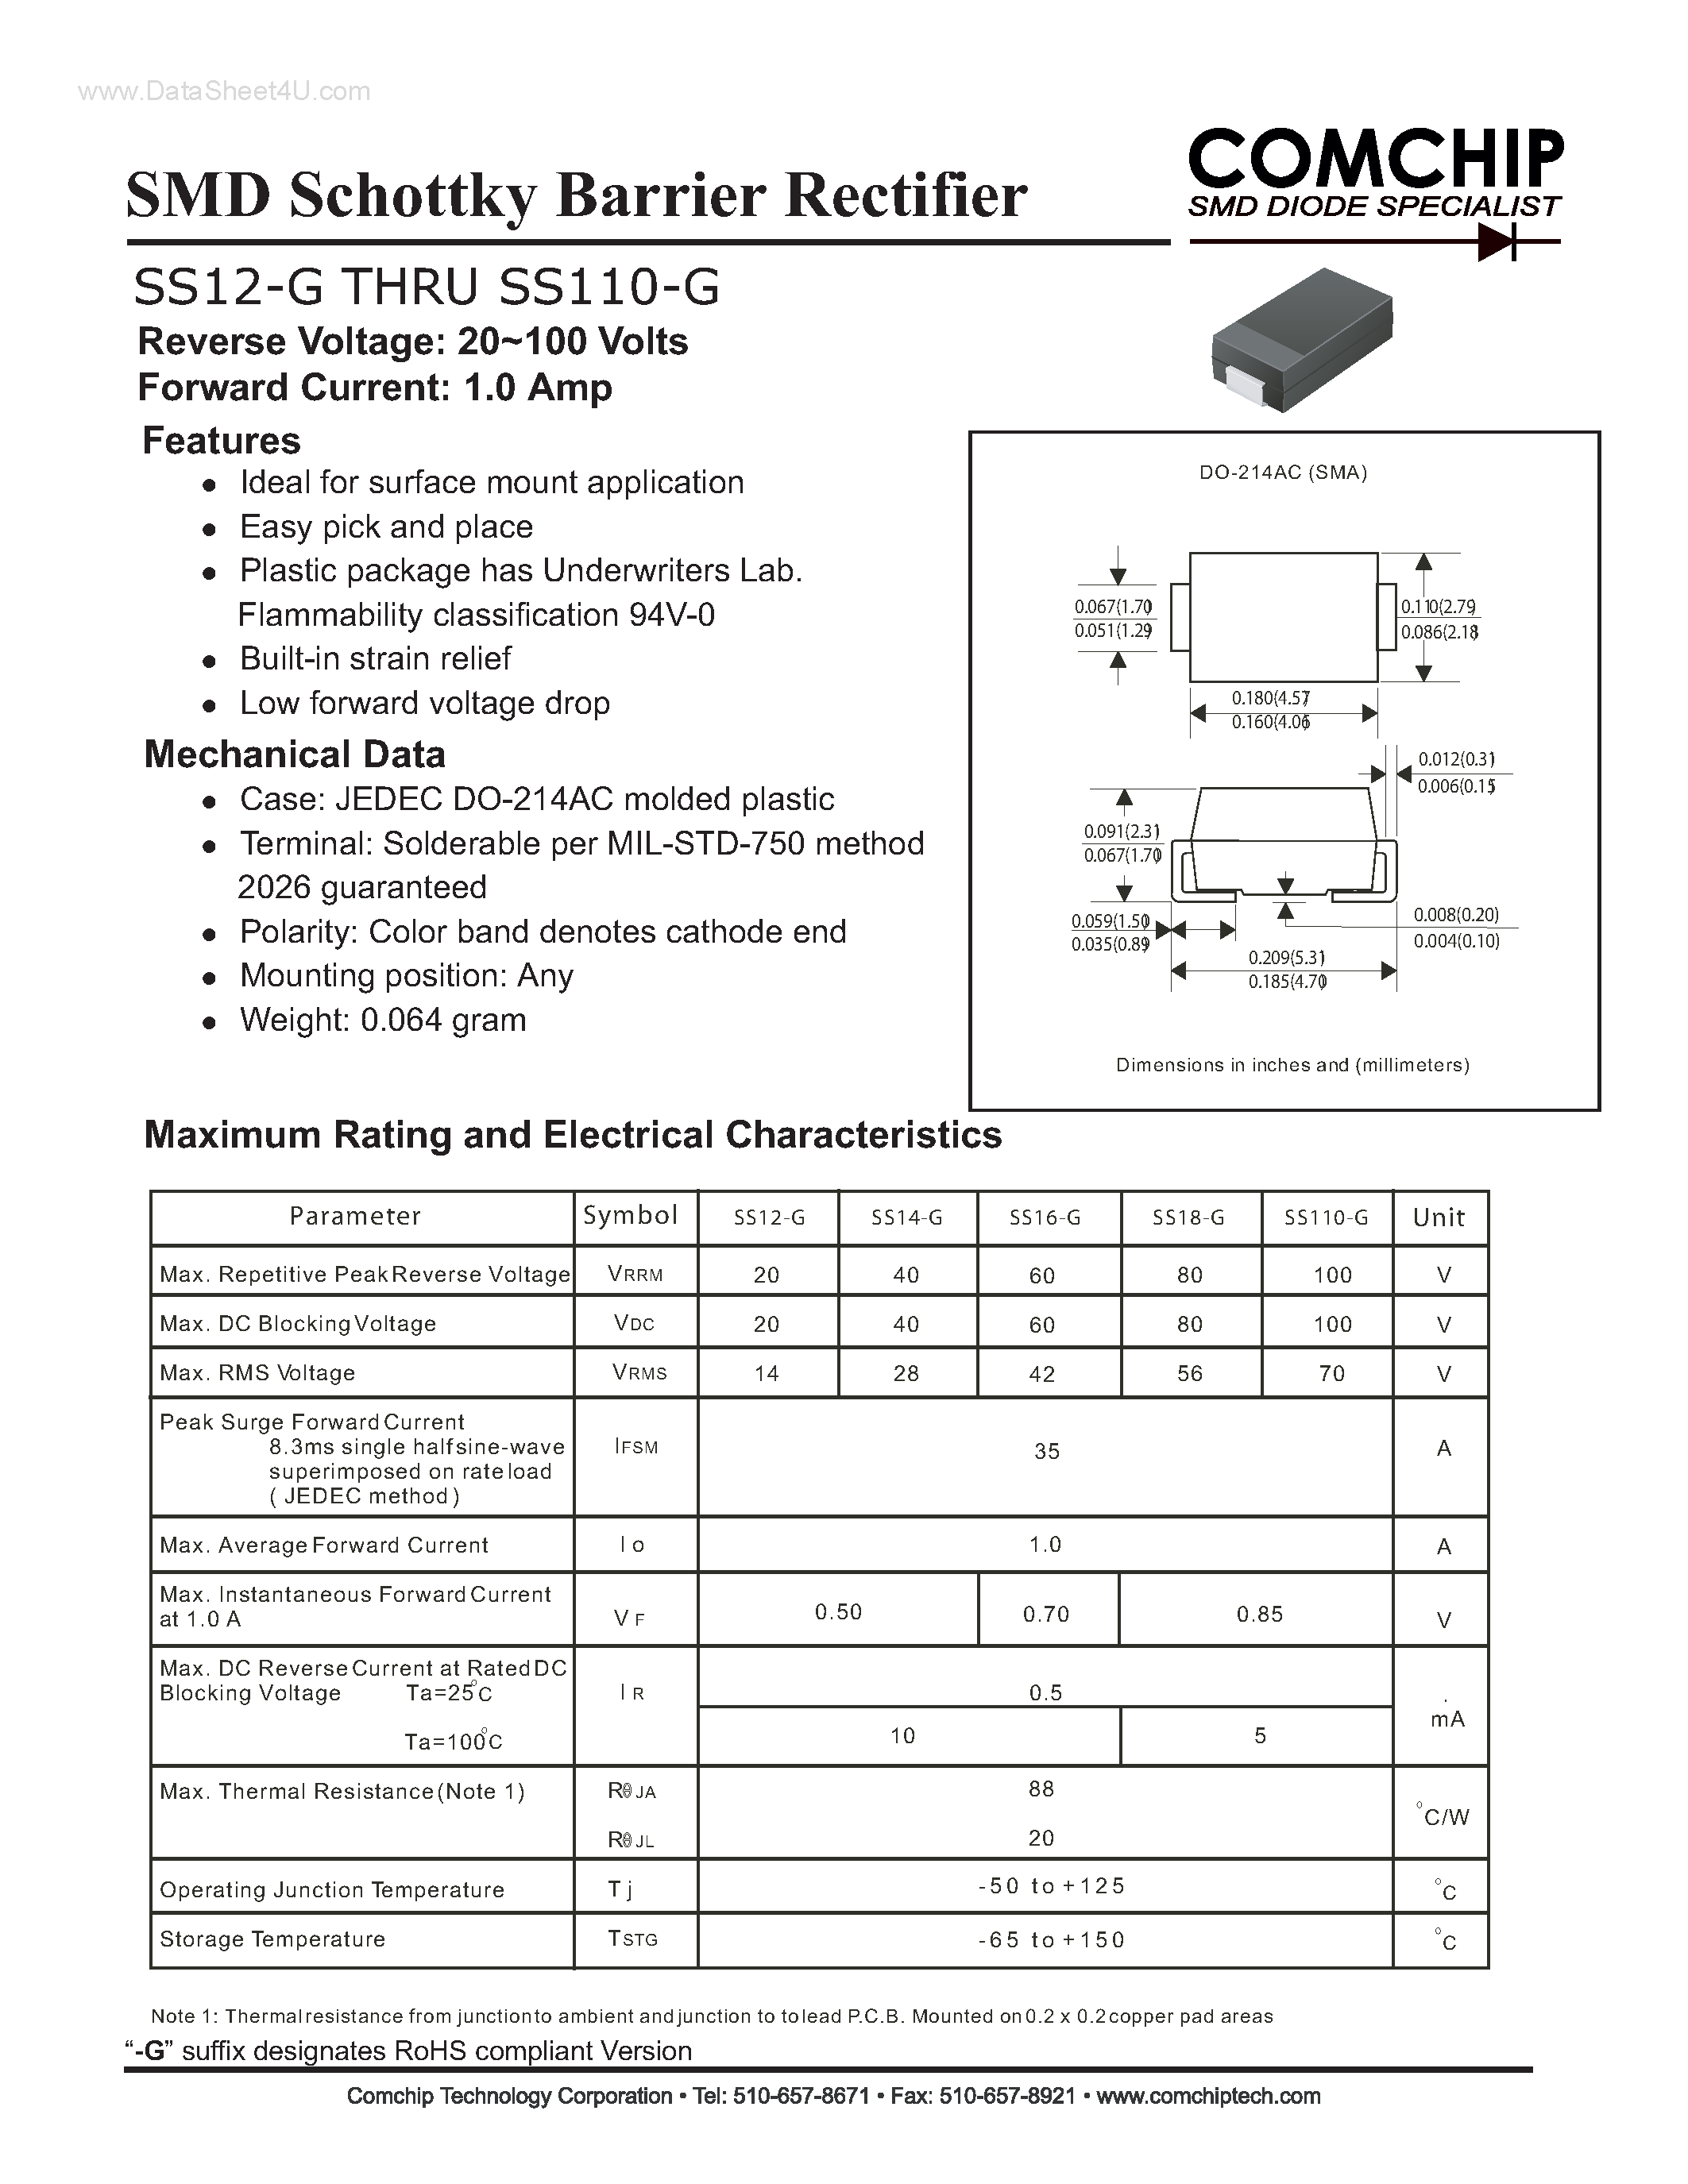 Даташит SS110-G - (SS12-G - SS110-G) SMD Schottky Barrier Rectifier страница 1